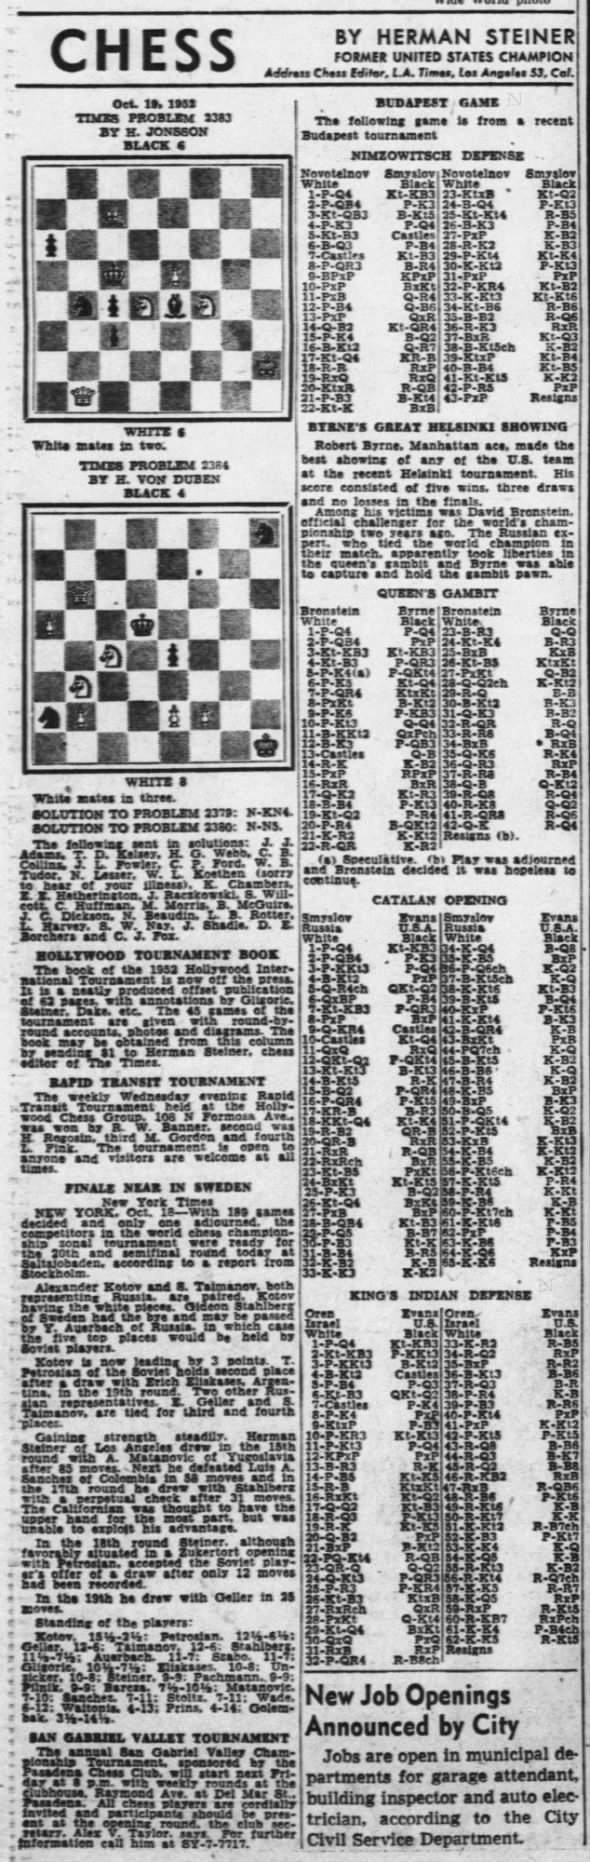 Chess by Herman Steiner